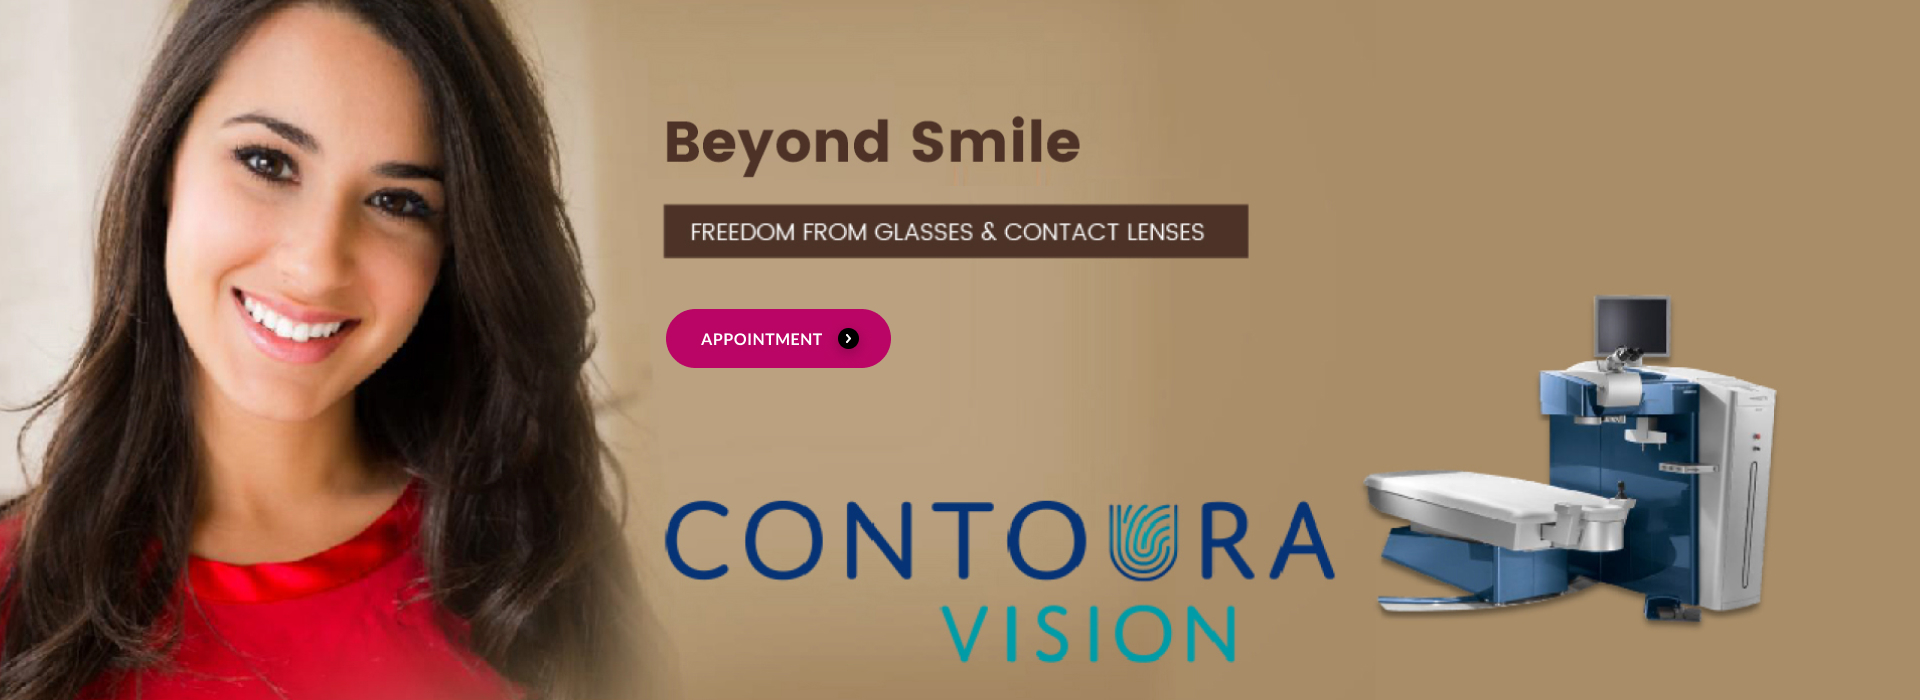 Contoura Vision for specs removal_ICARE Eye Hospital, Noida